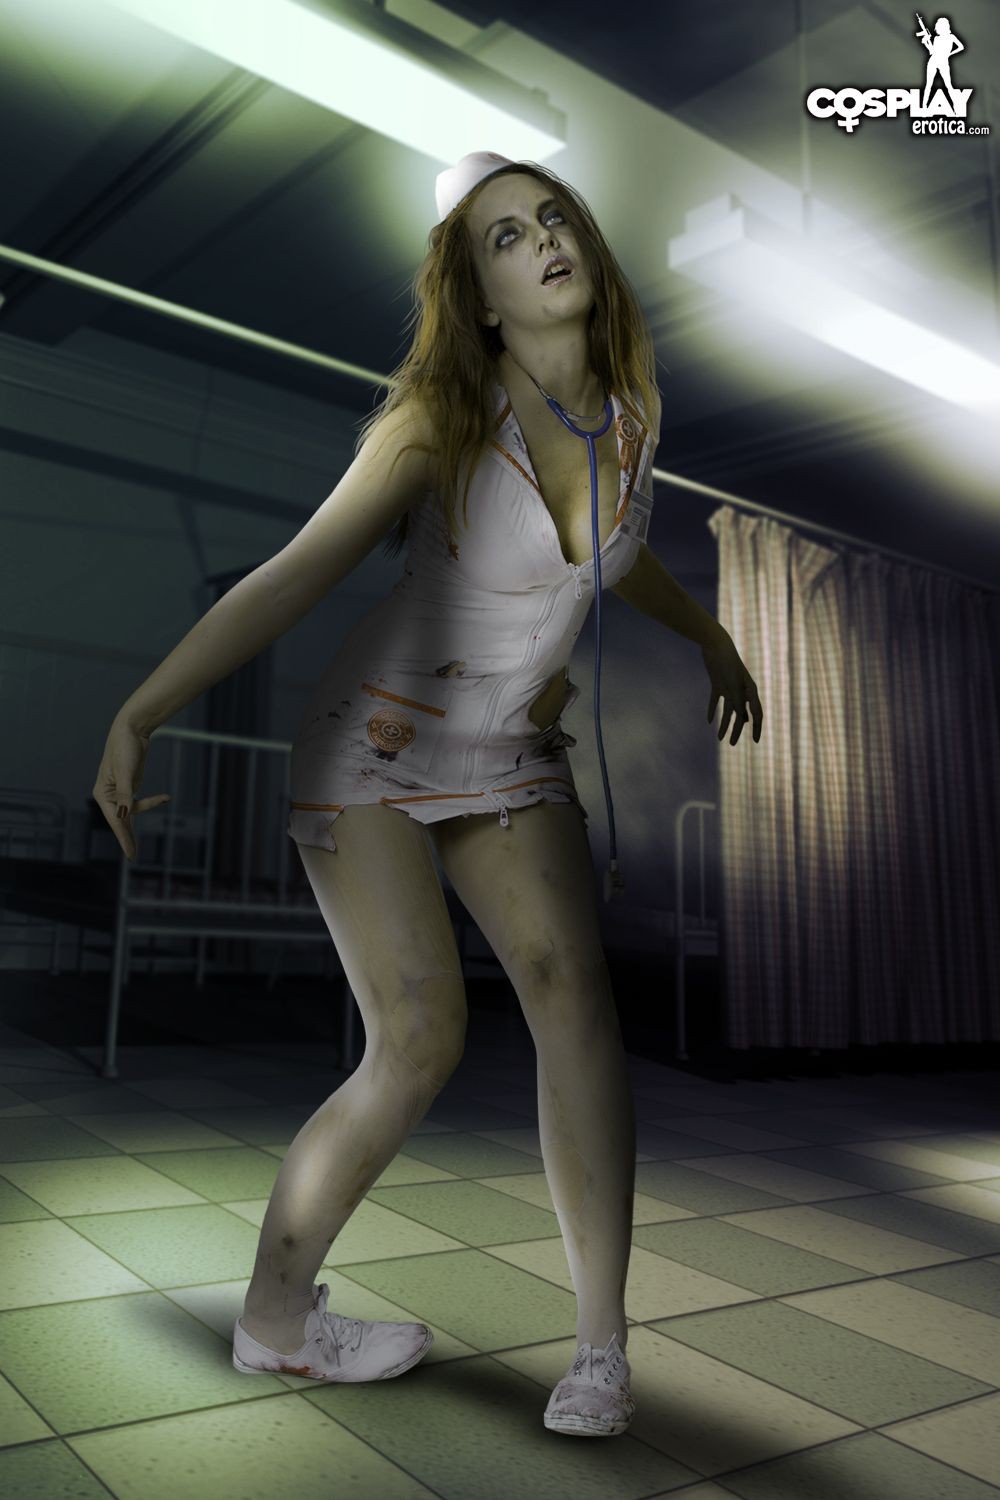 Cosplay featuring Walking Dead zombie in nurse uniform naked #73223905